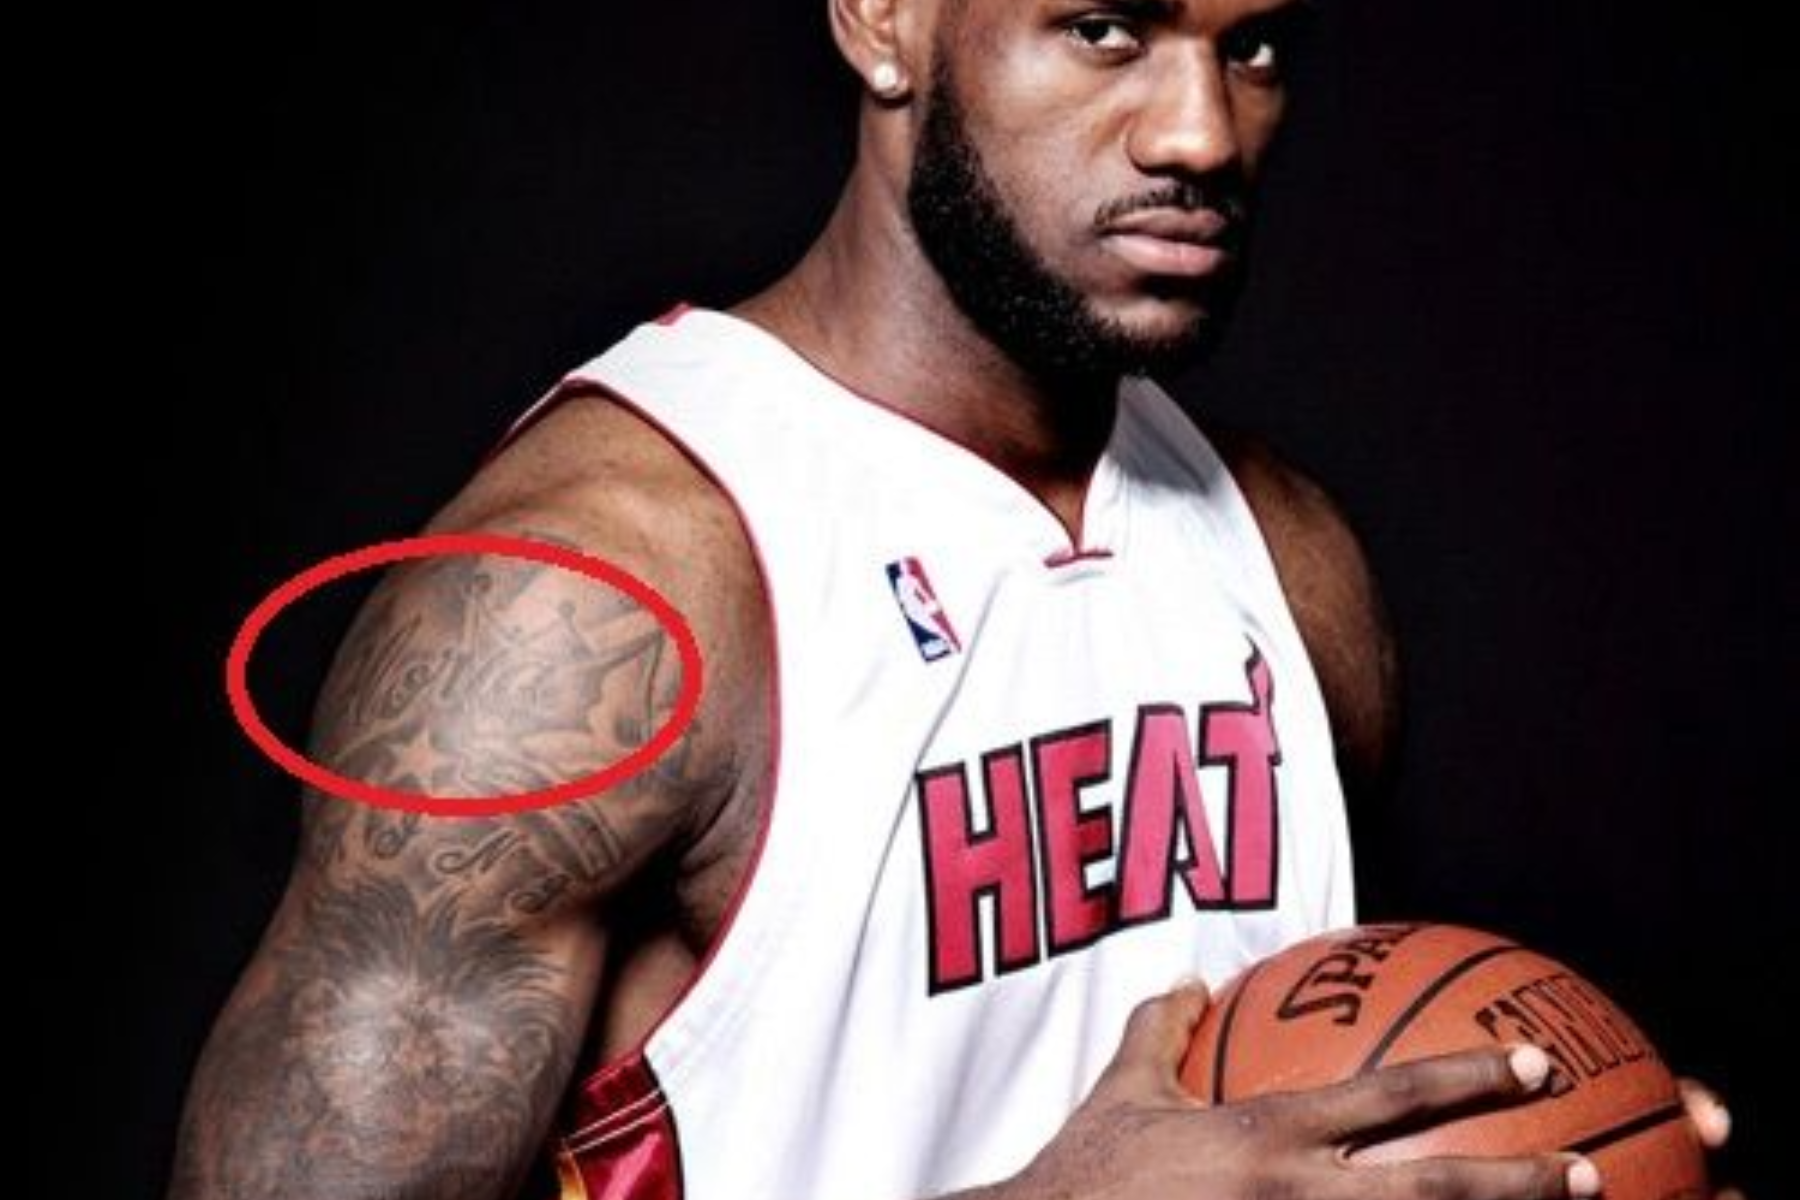 LeBron James has a Gloria tattoo on his right arm